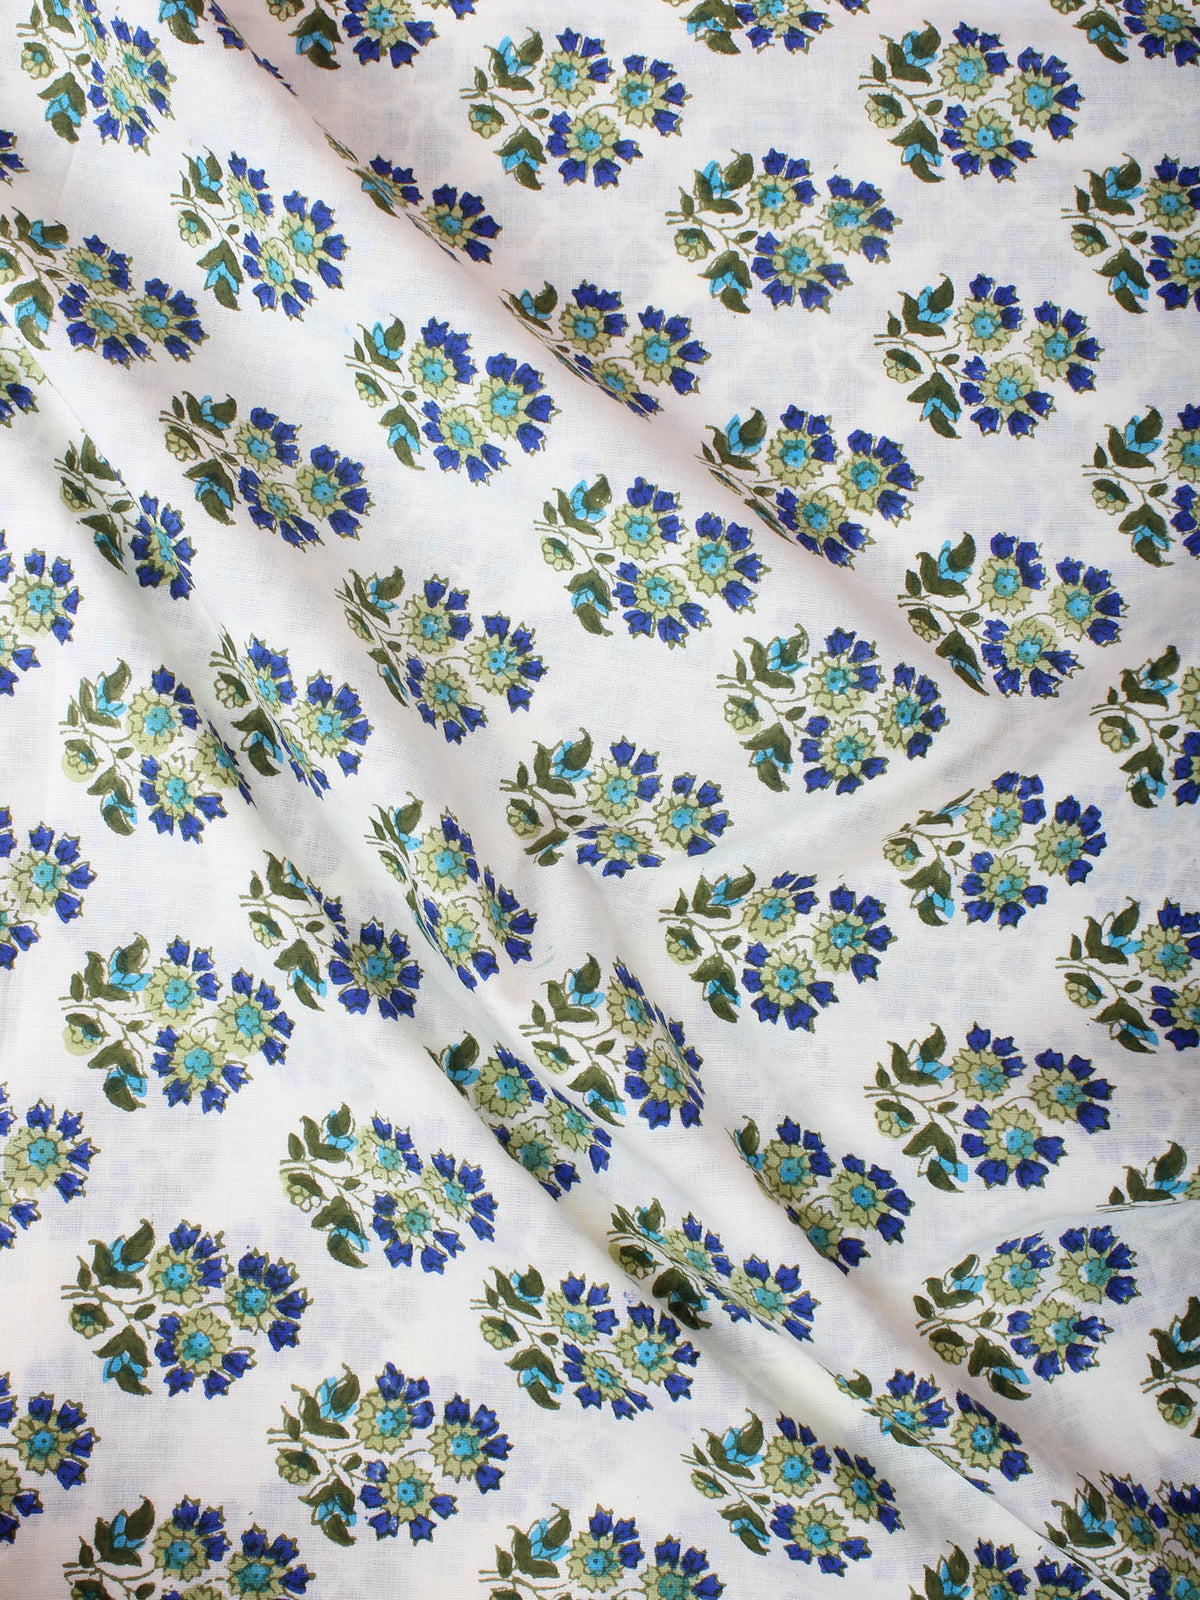 White Blue Green Hand Block Printed Cotton Cambric Fabric Per Meter - F0916408